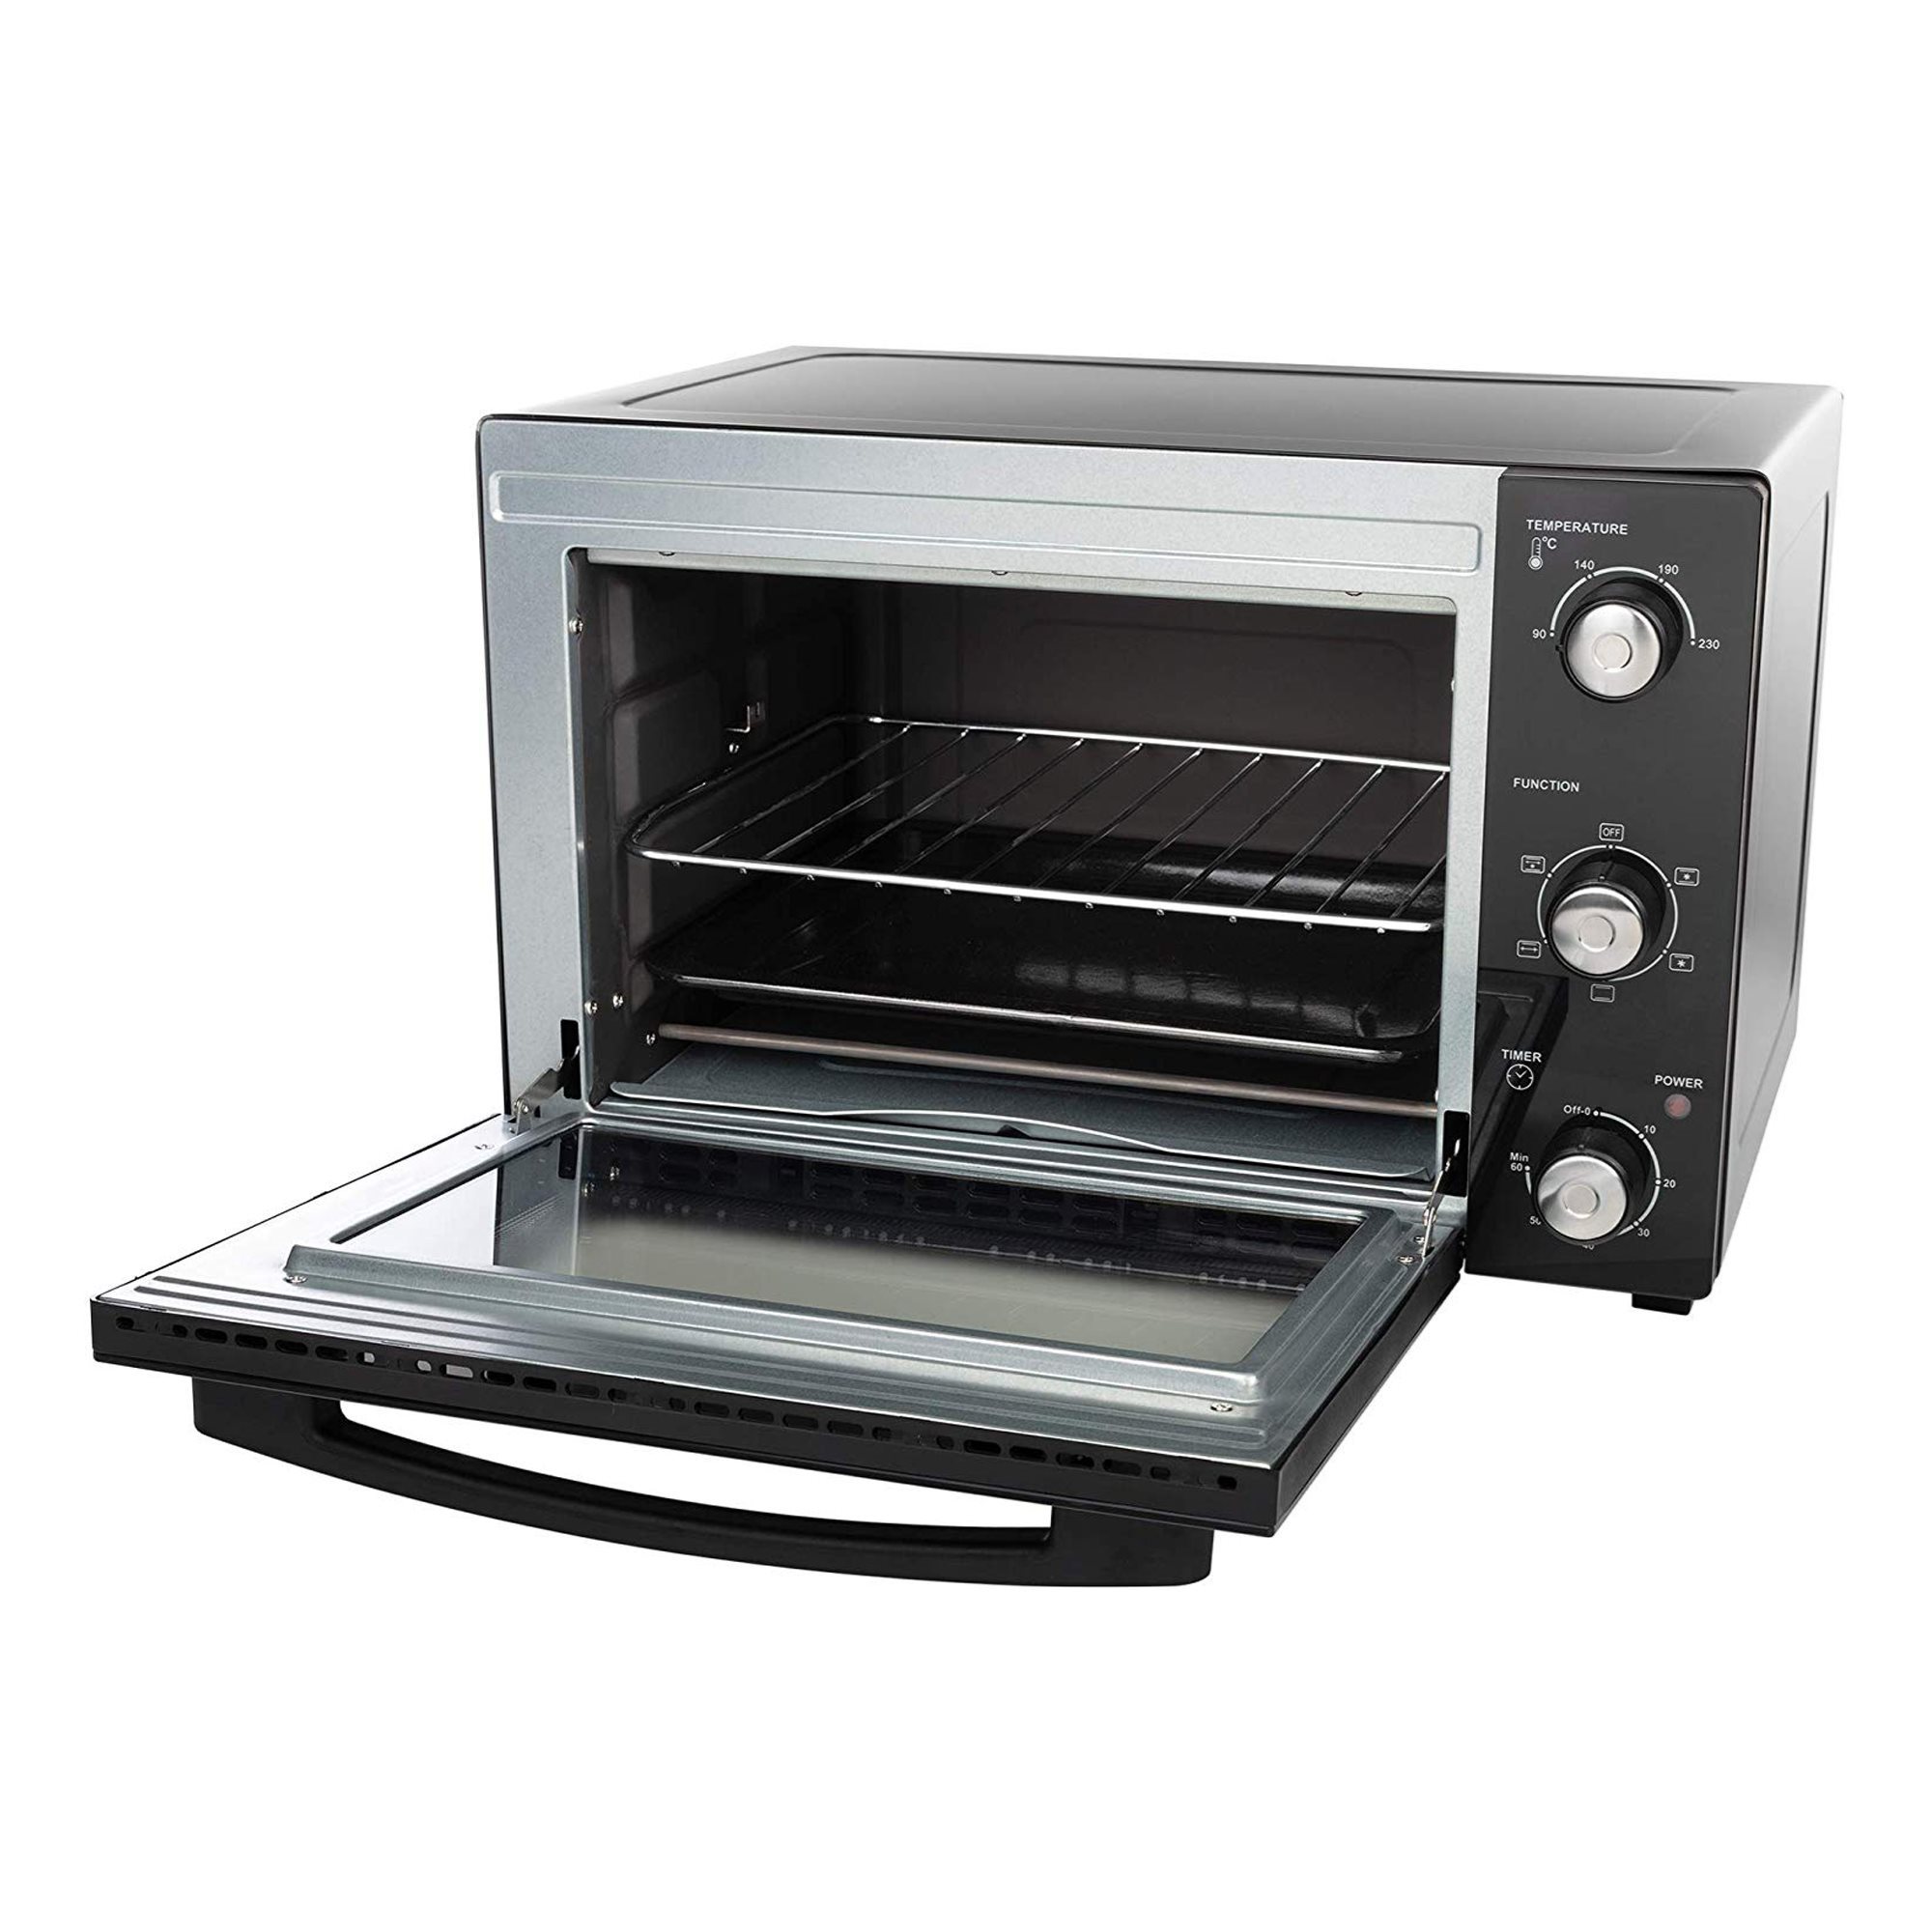 Deluxe convection oven, 32 L, 1500 W - Princess | KitchenShop